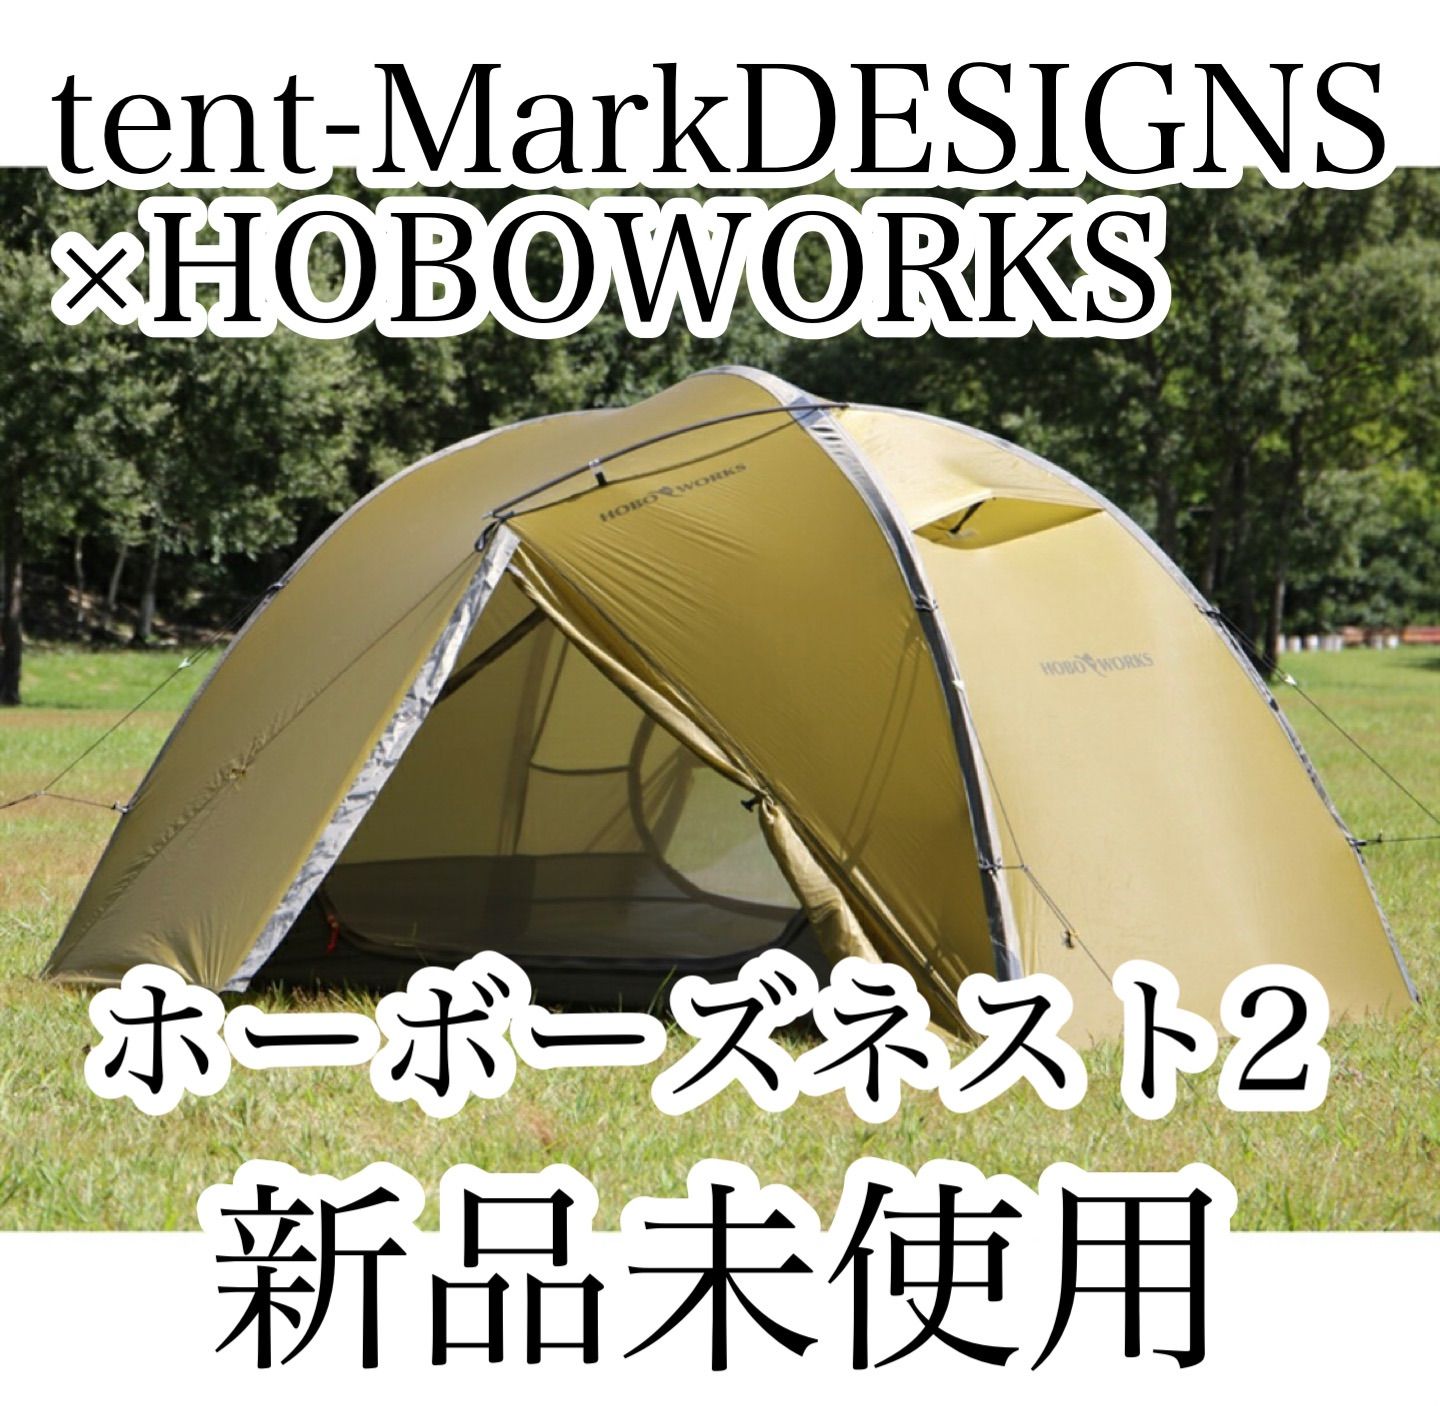 tent-Mark DESIGNS×HOBOWORKS ホーボーズネスト 2 - テント/タープ